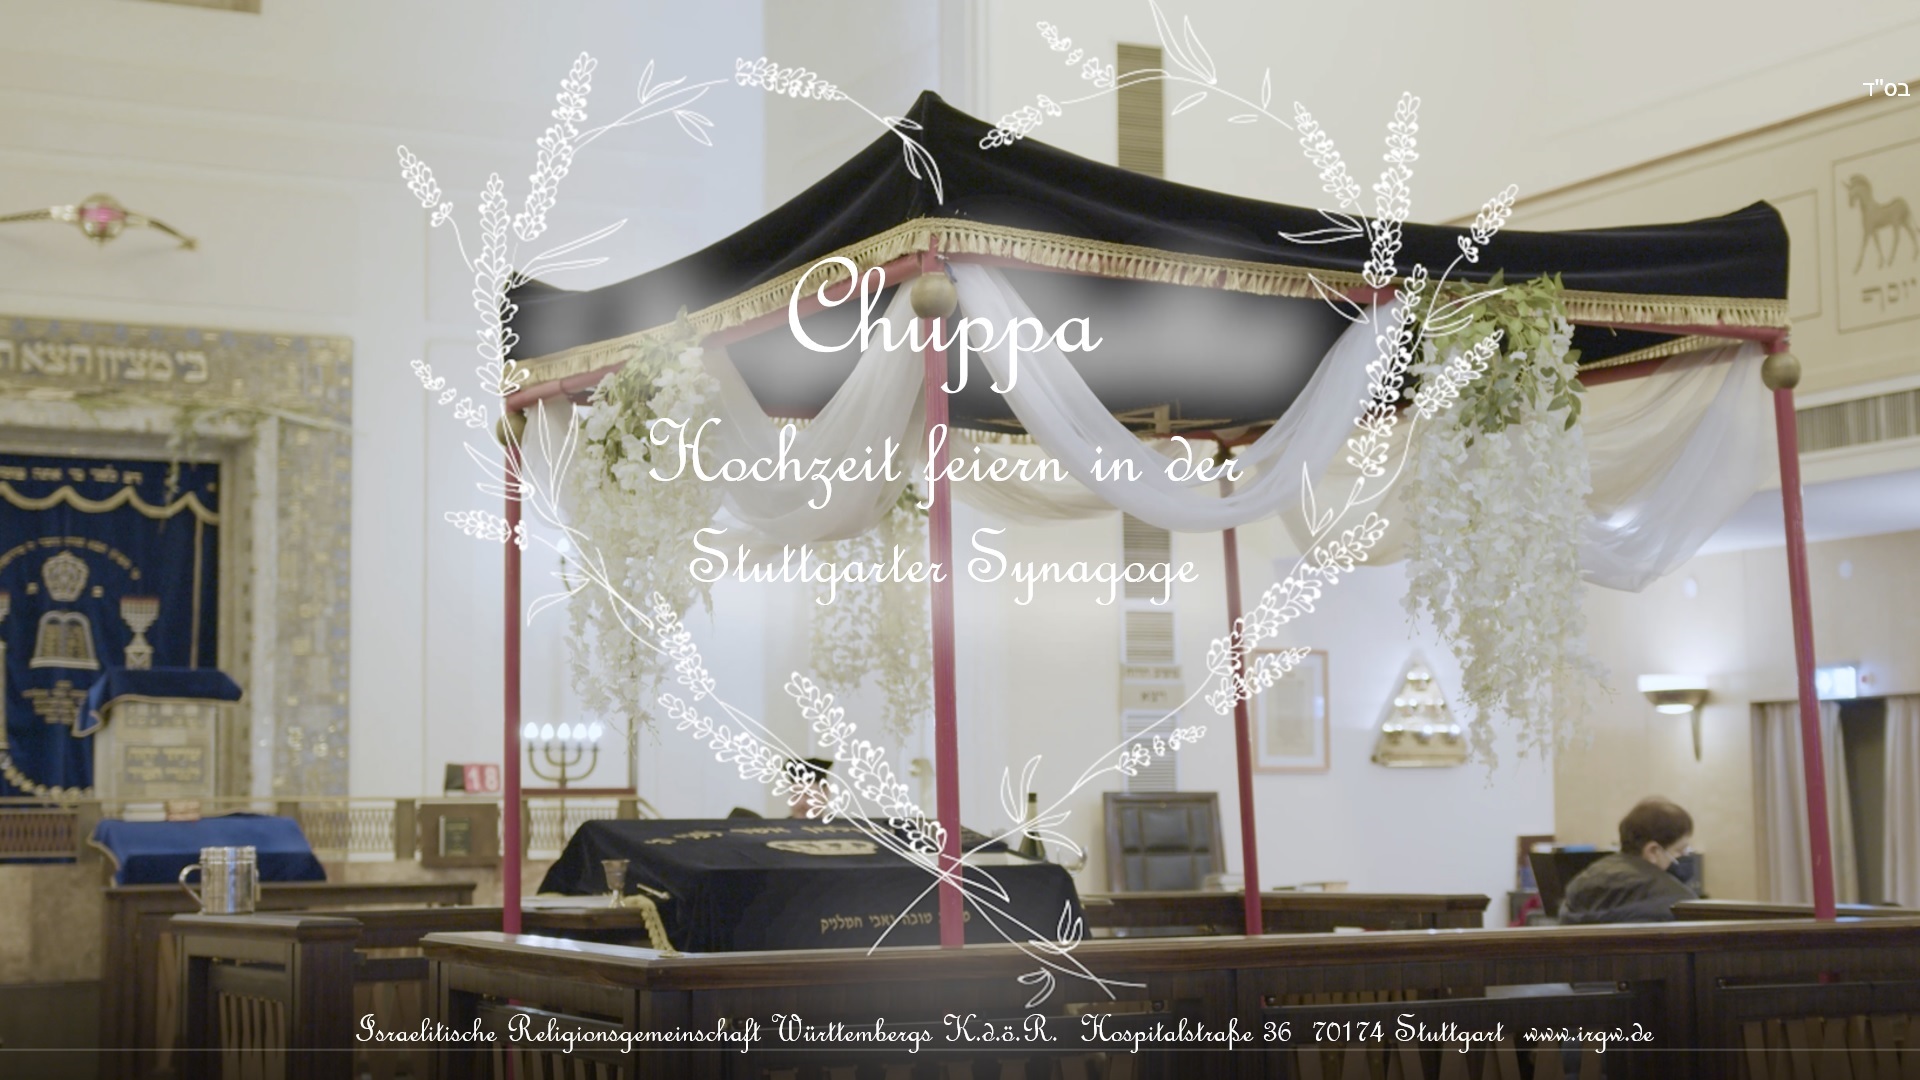 Chuppa - Hochzeit feiern